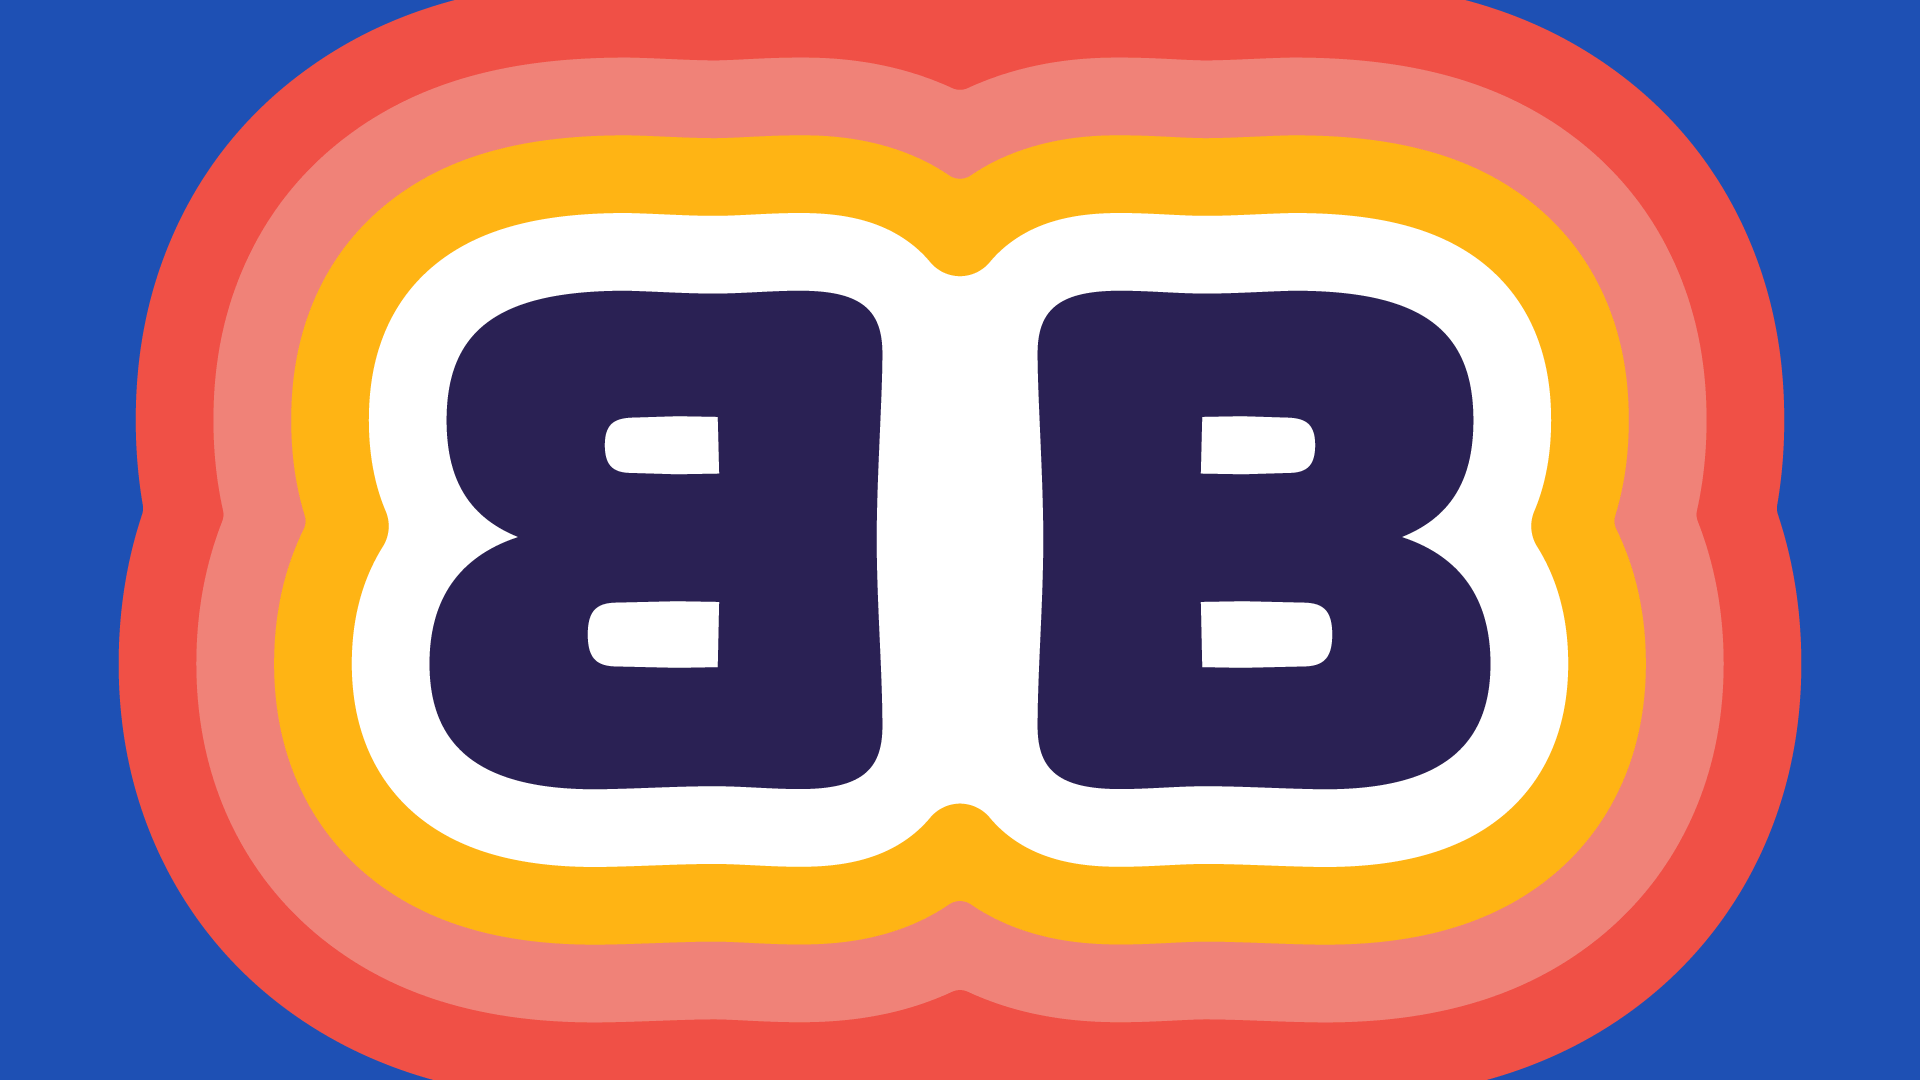 B is for Berlin